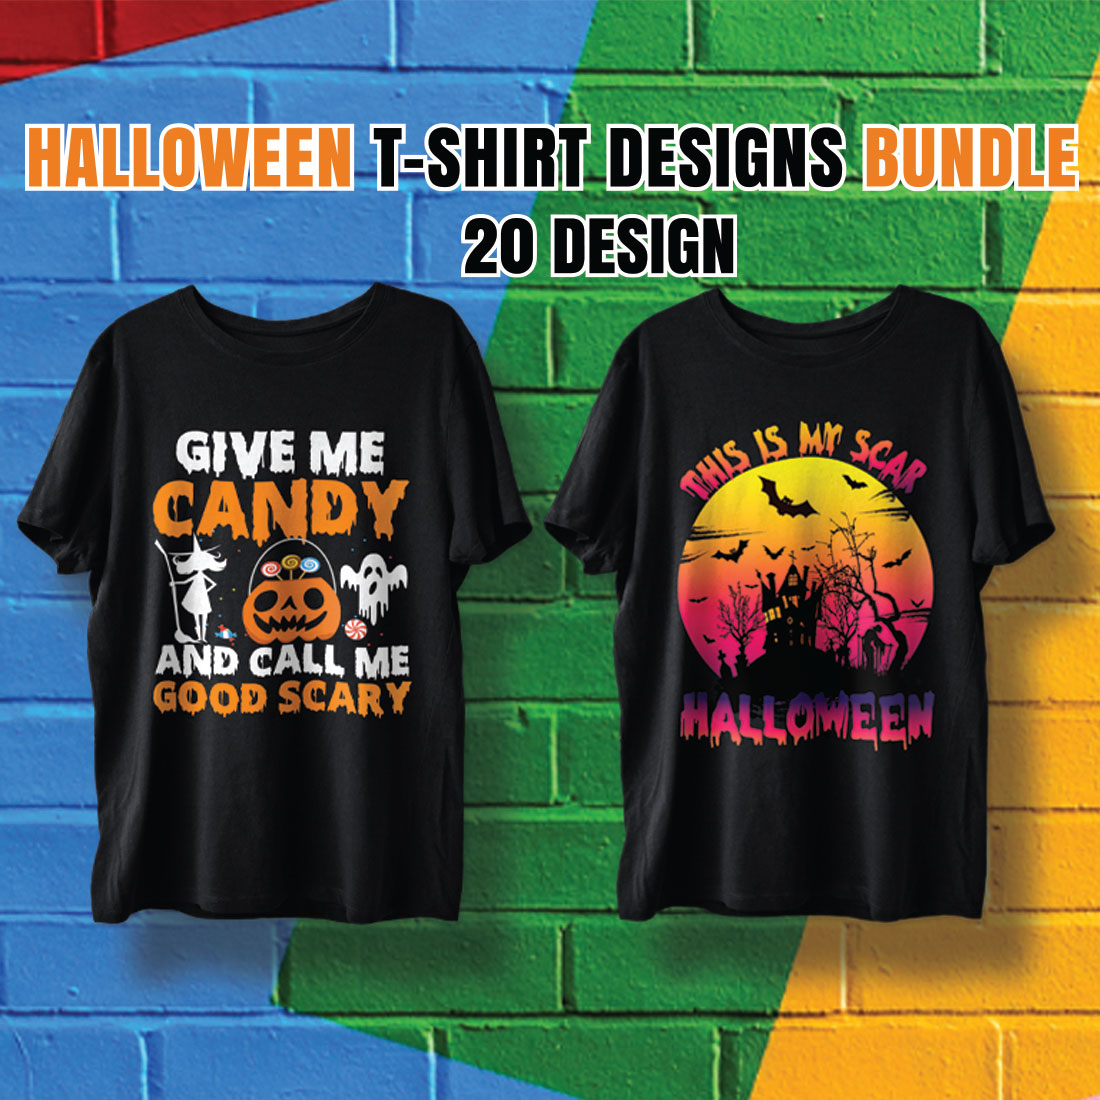 Halloween T-shirt Bundle 20 Design cover image.